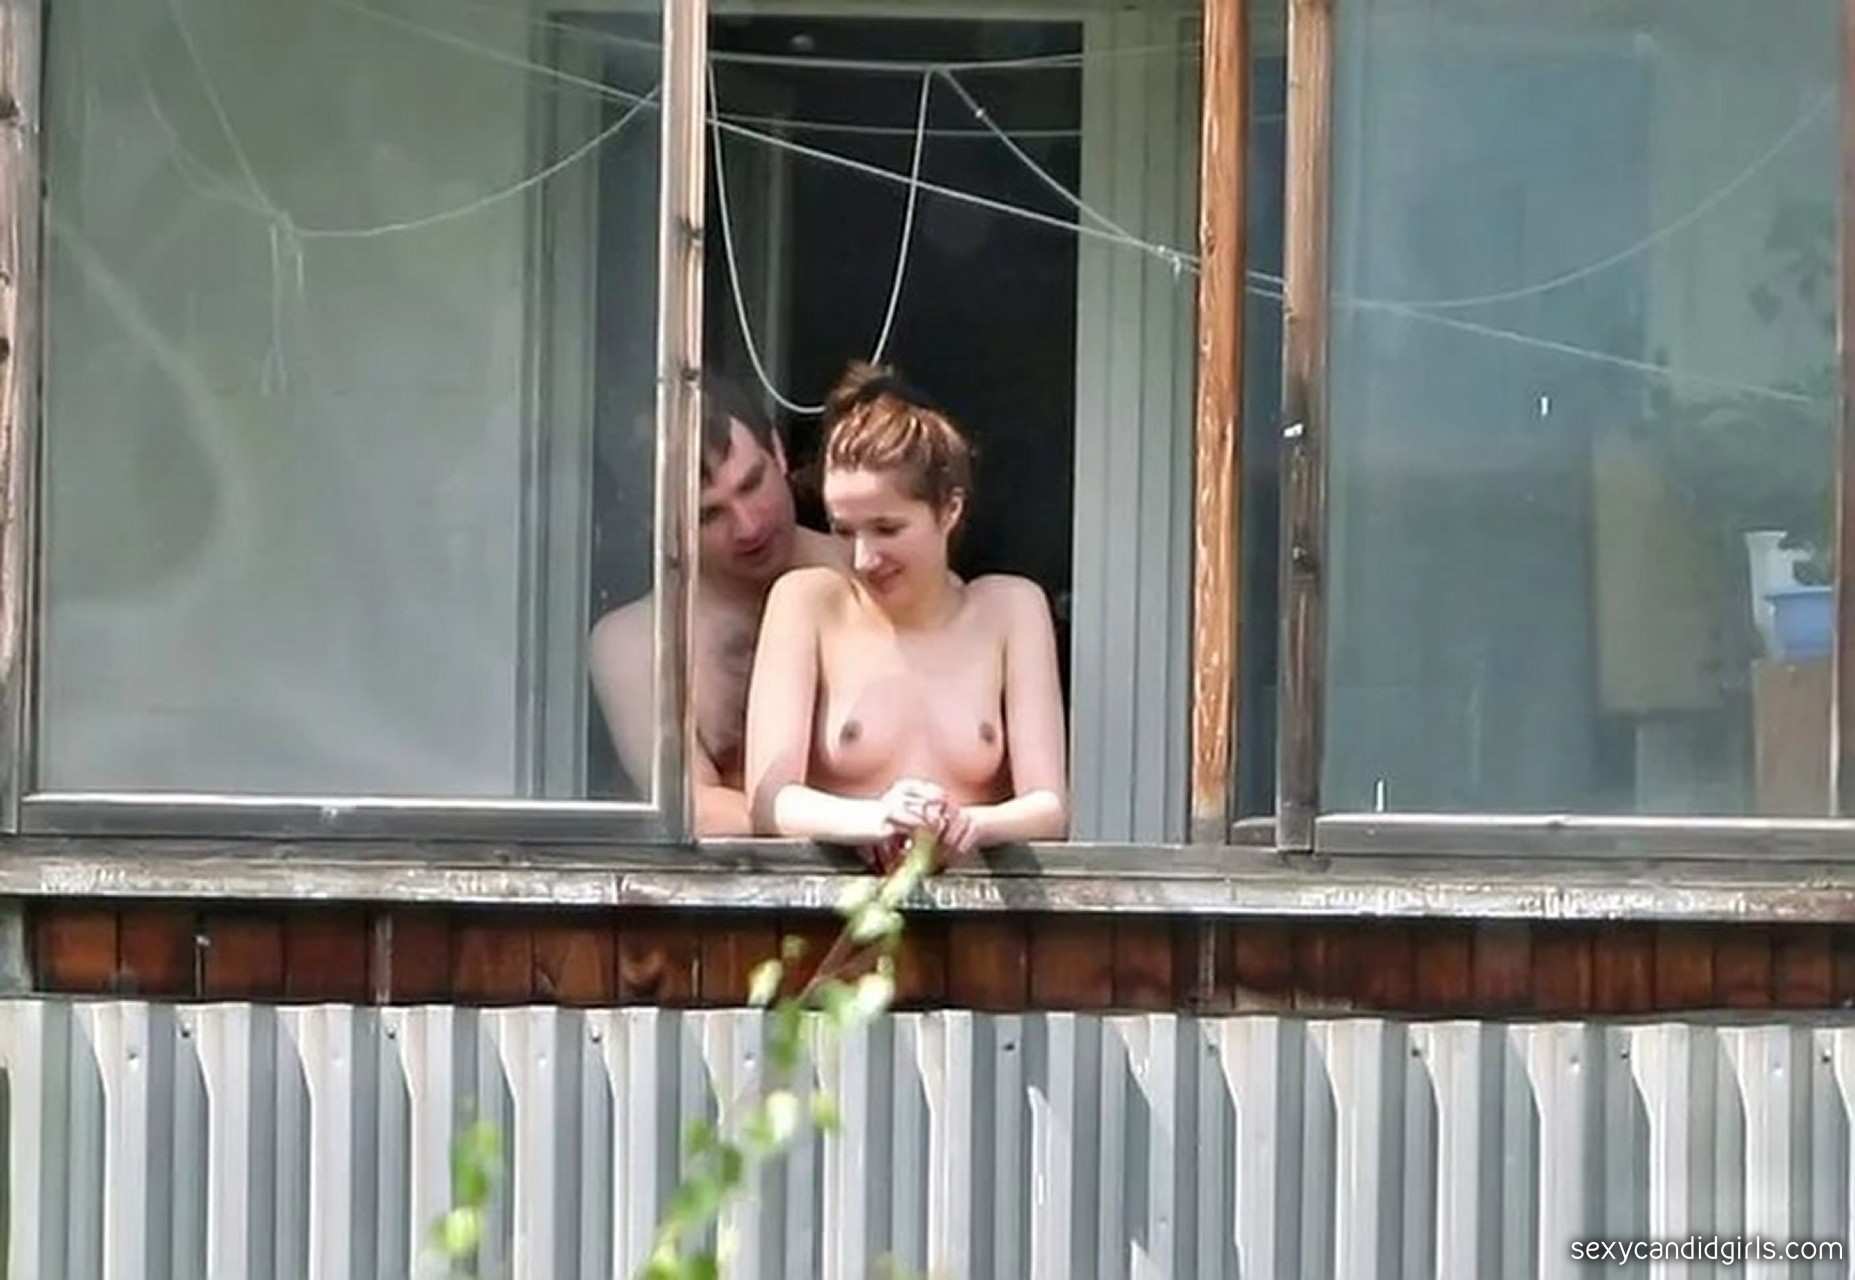 Spying Nude Neighbour Girls – Sexy Candid Girls